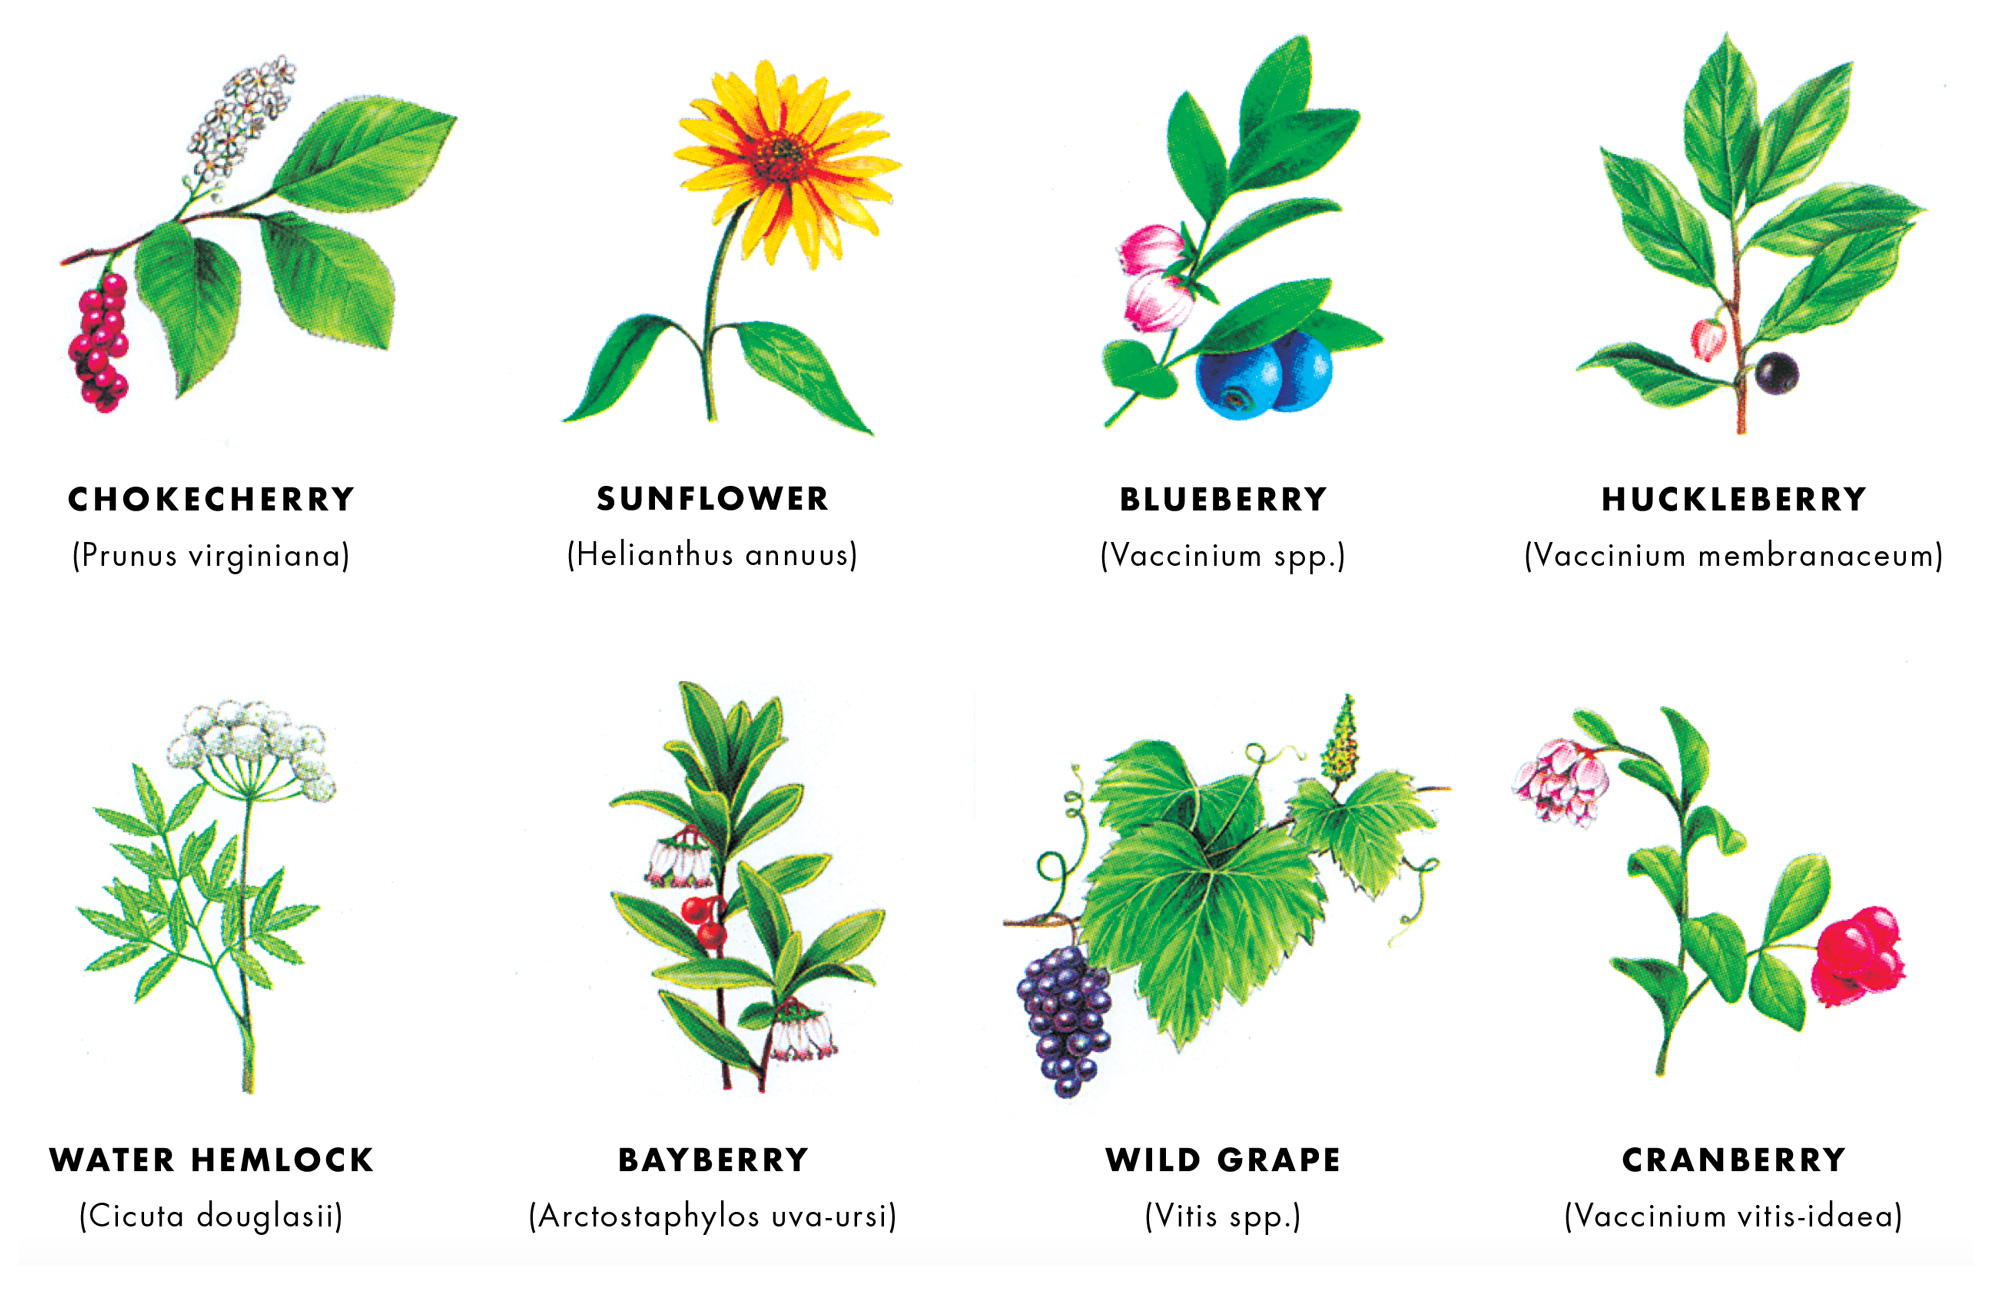 Edible wild plants that Thoreau would have recognized.